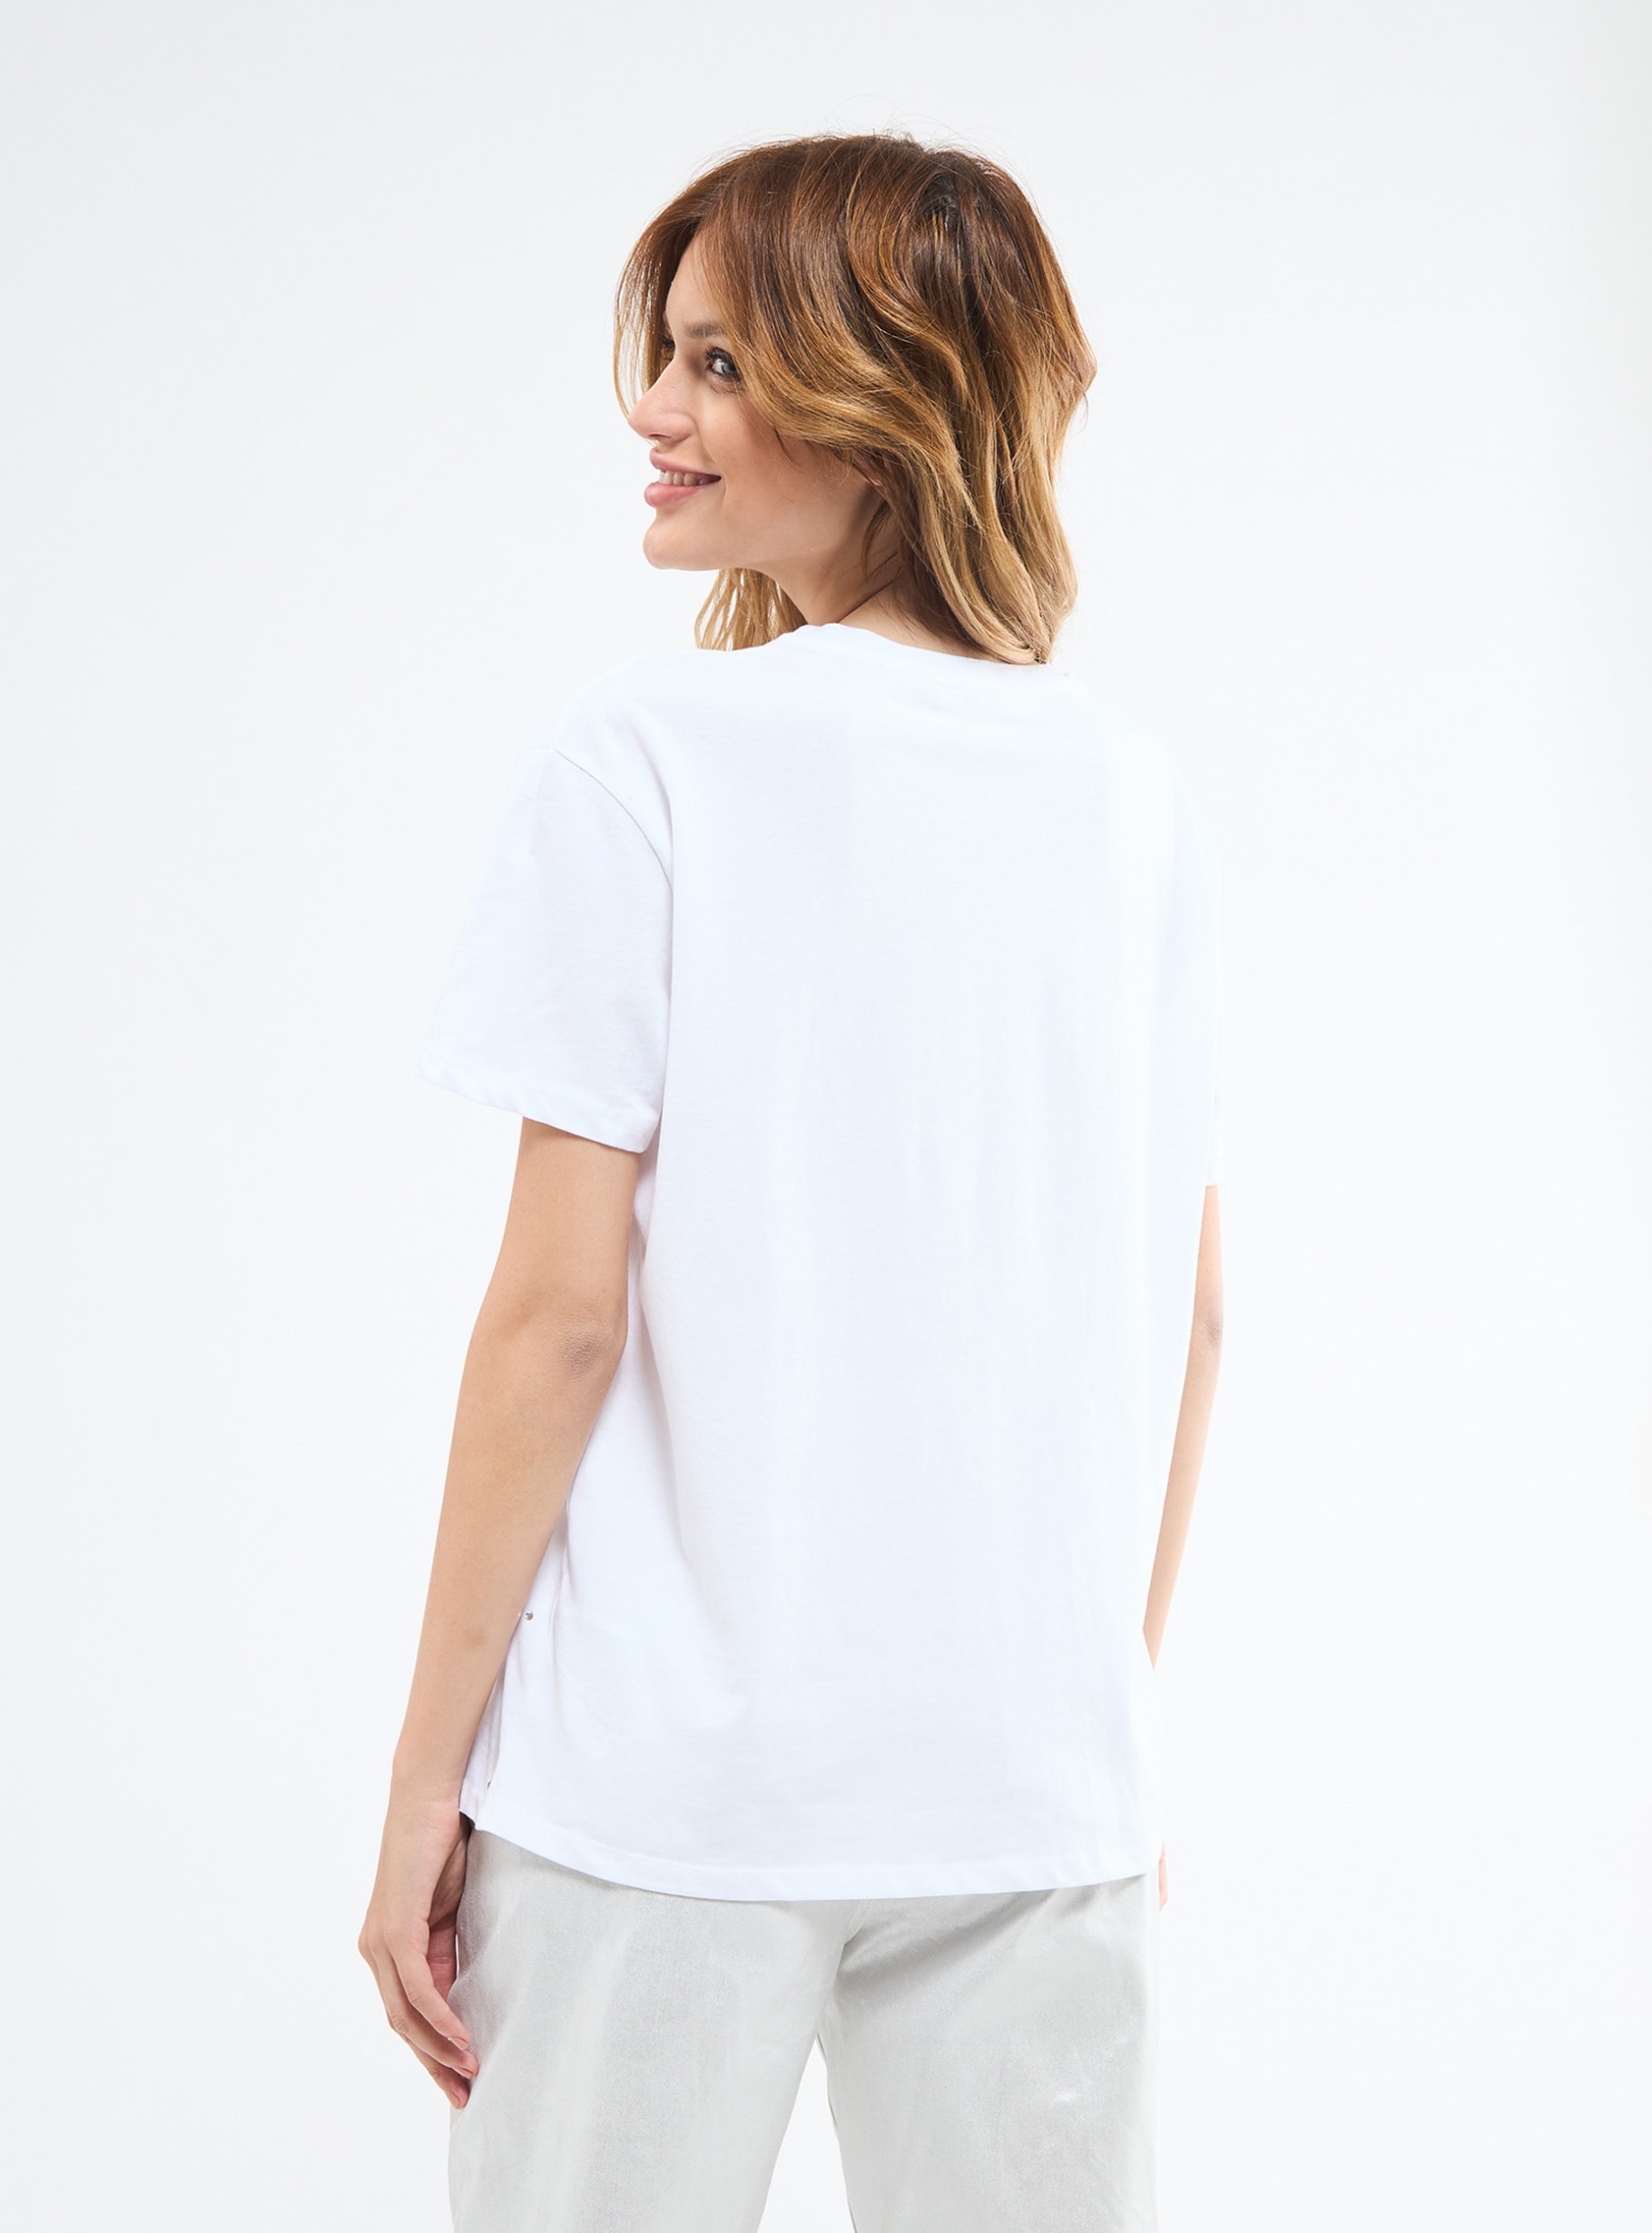 Buy Terranova | Optical with - rhinestone Crew Online T-shirt neck white